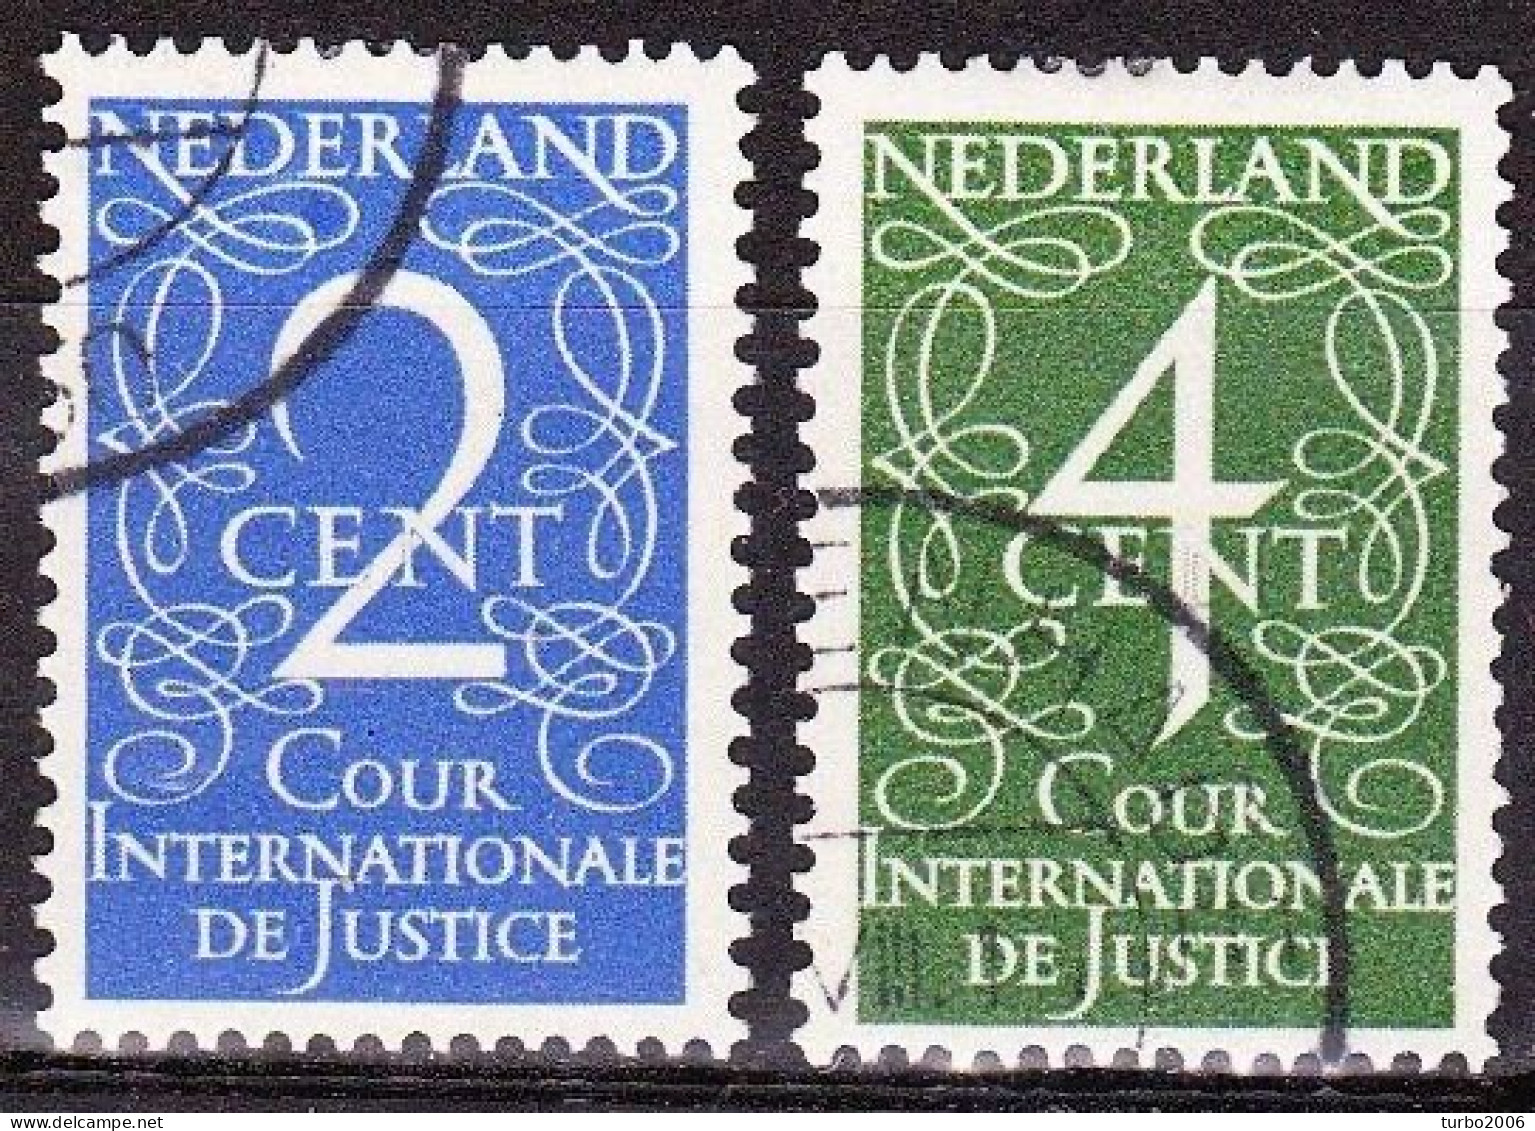 1950 C.I.D.J. Dienstzegels Cijfers NVPH D 25 / 26 - Dienstzegels